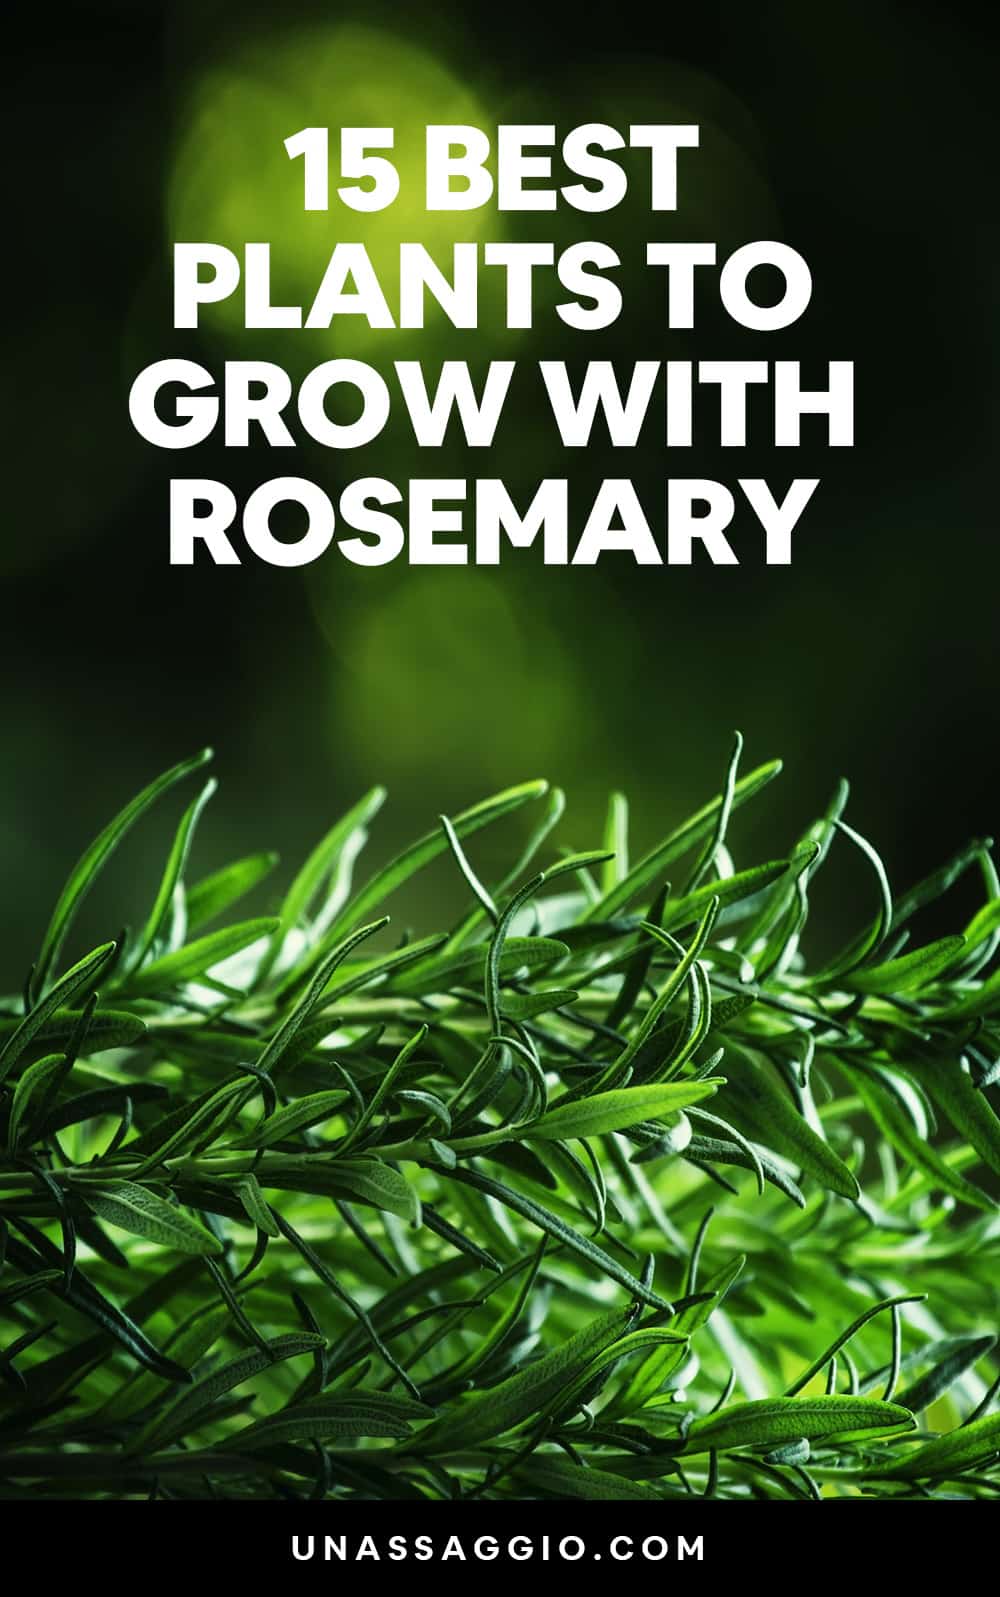 Rosemary Companion Plants